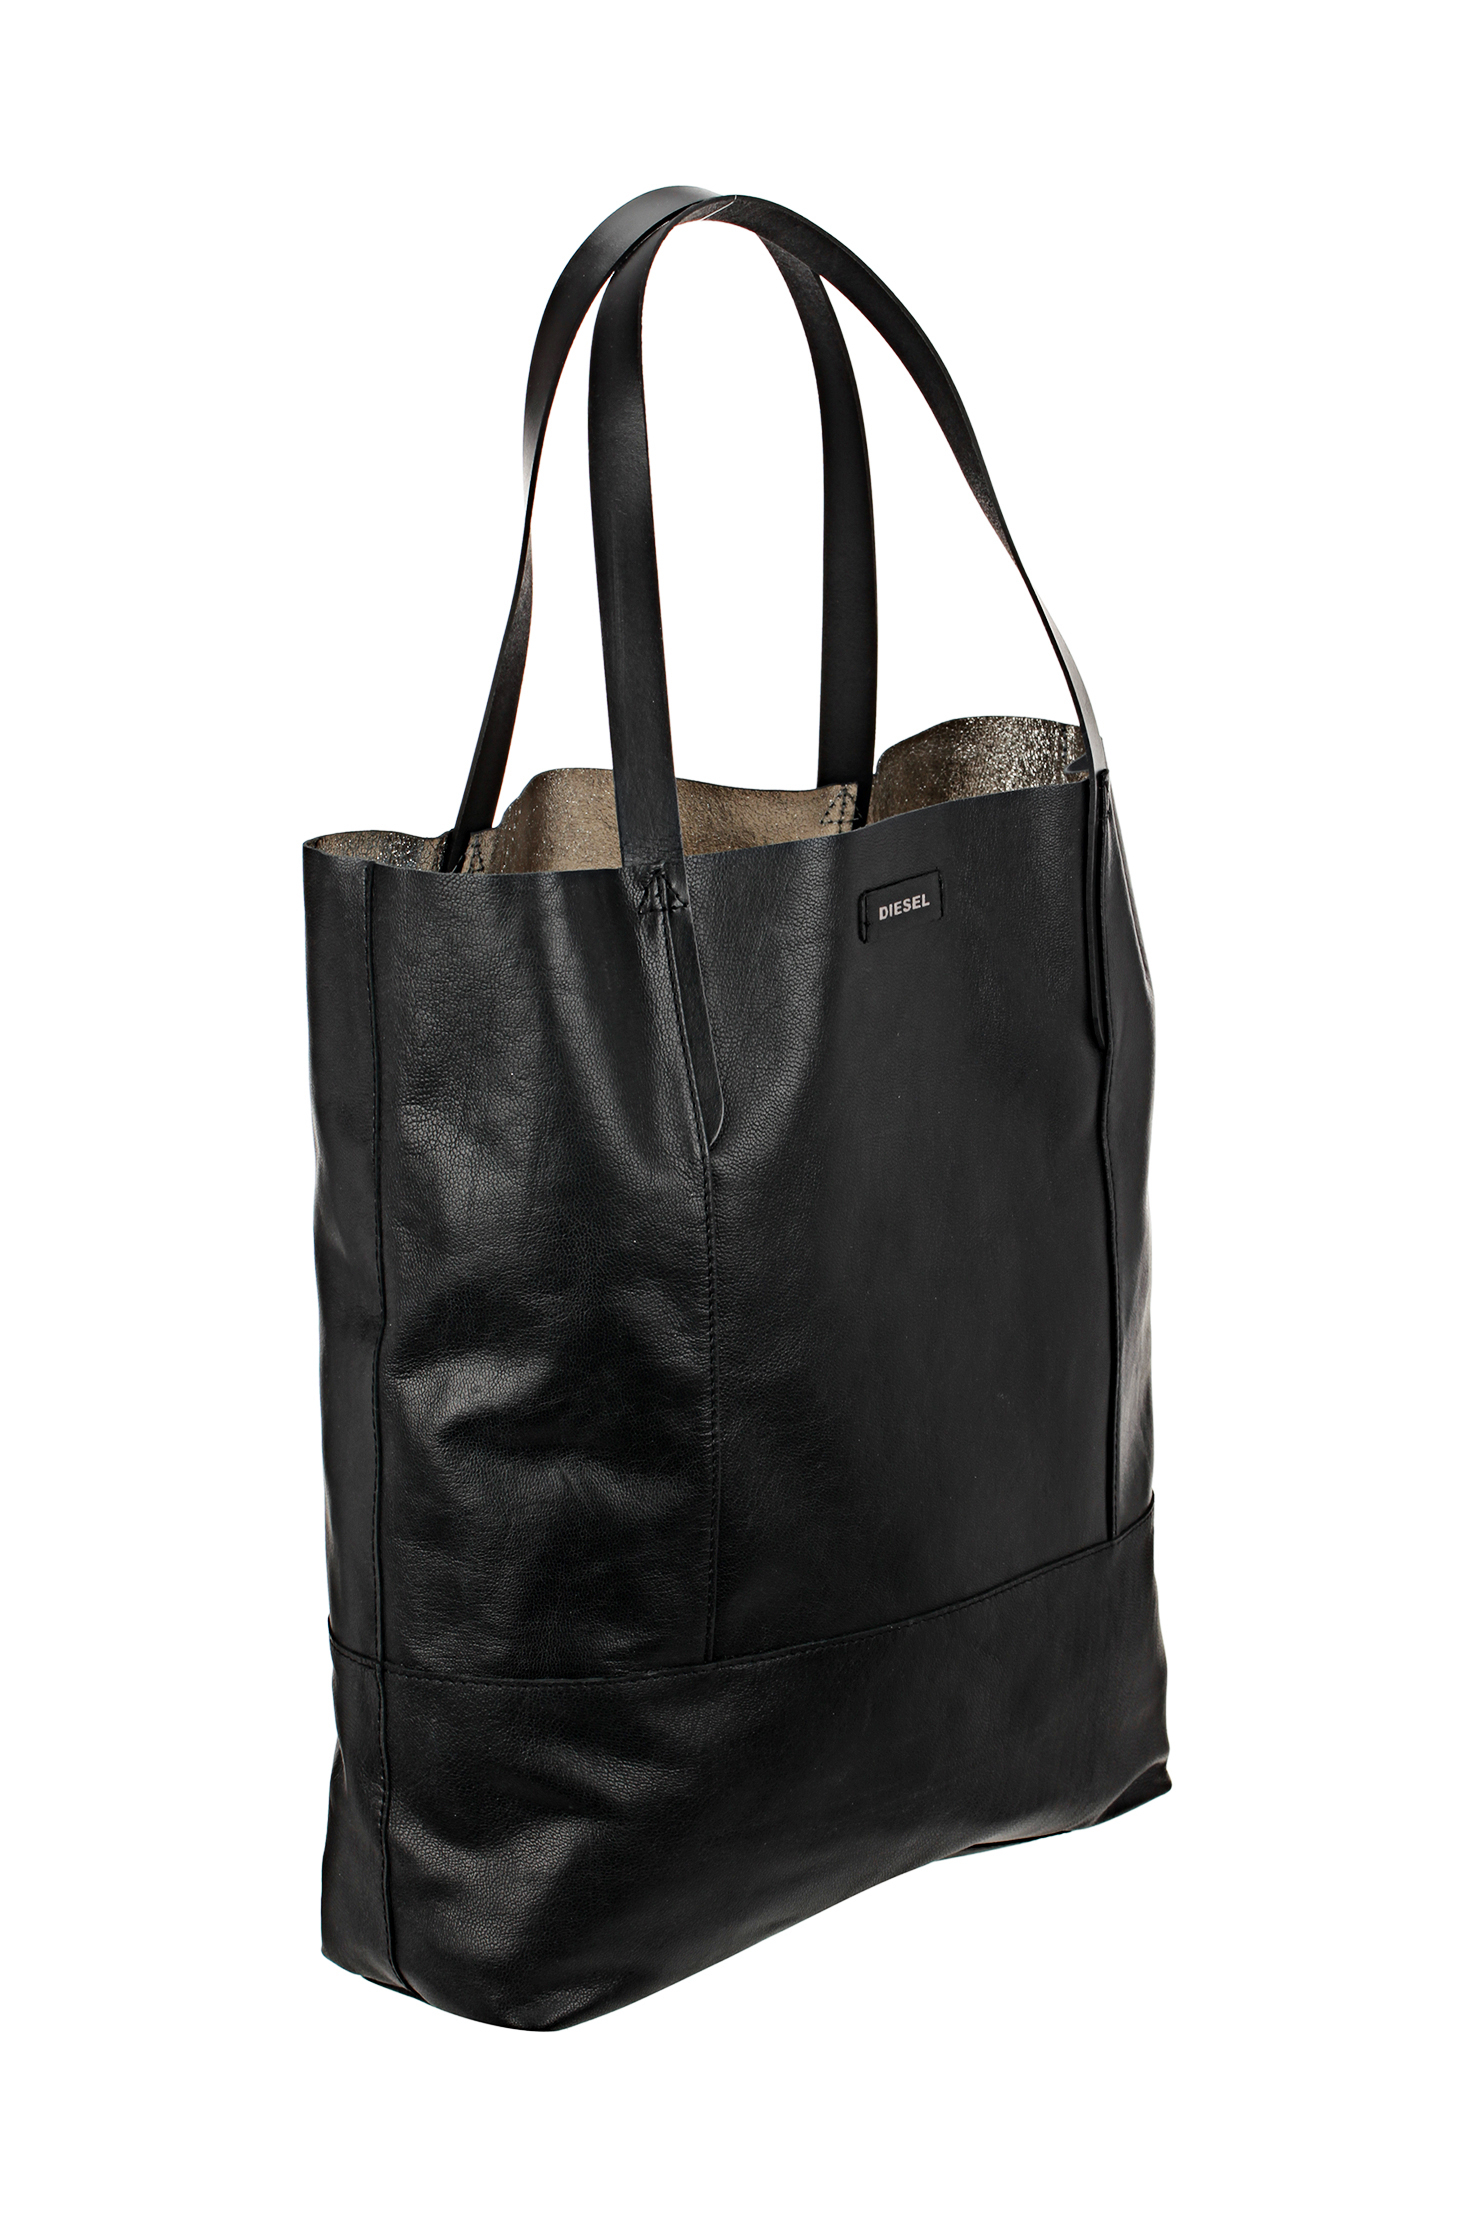 Diesel Leather Bag - X03041P0512 Easy Gleaming Dafne - Shopping Bag in